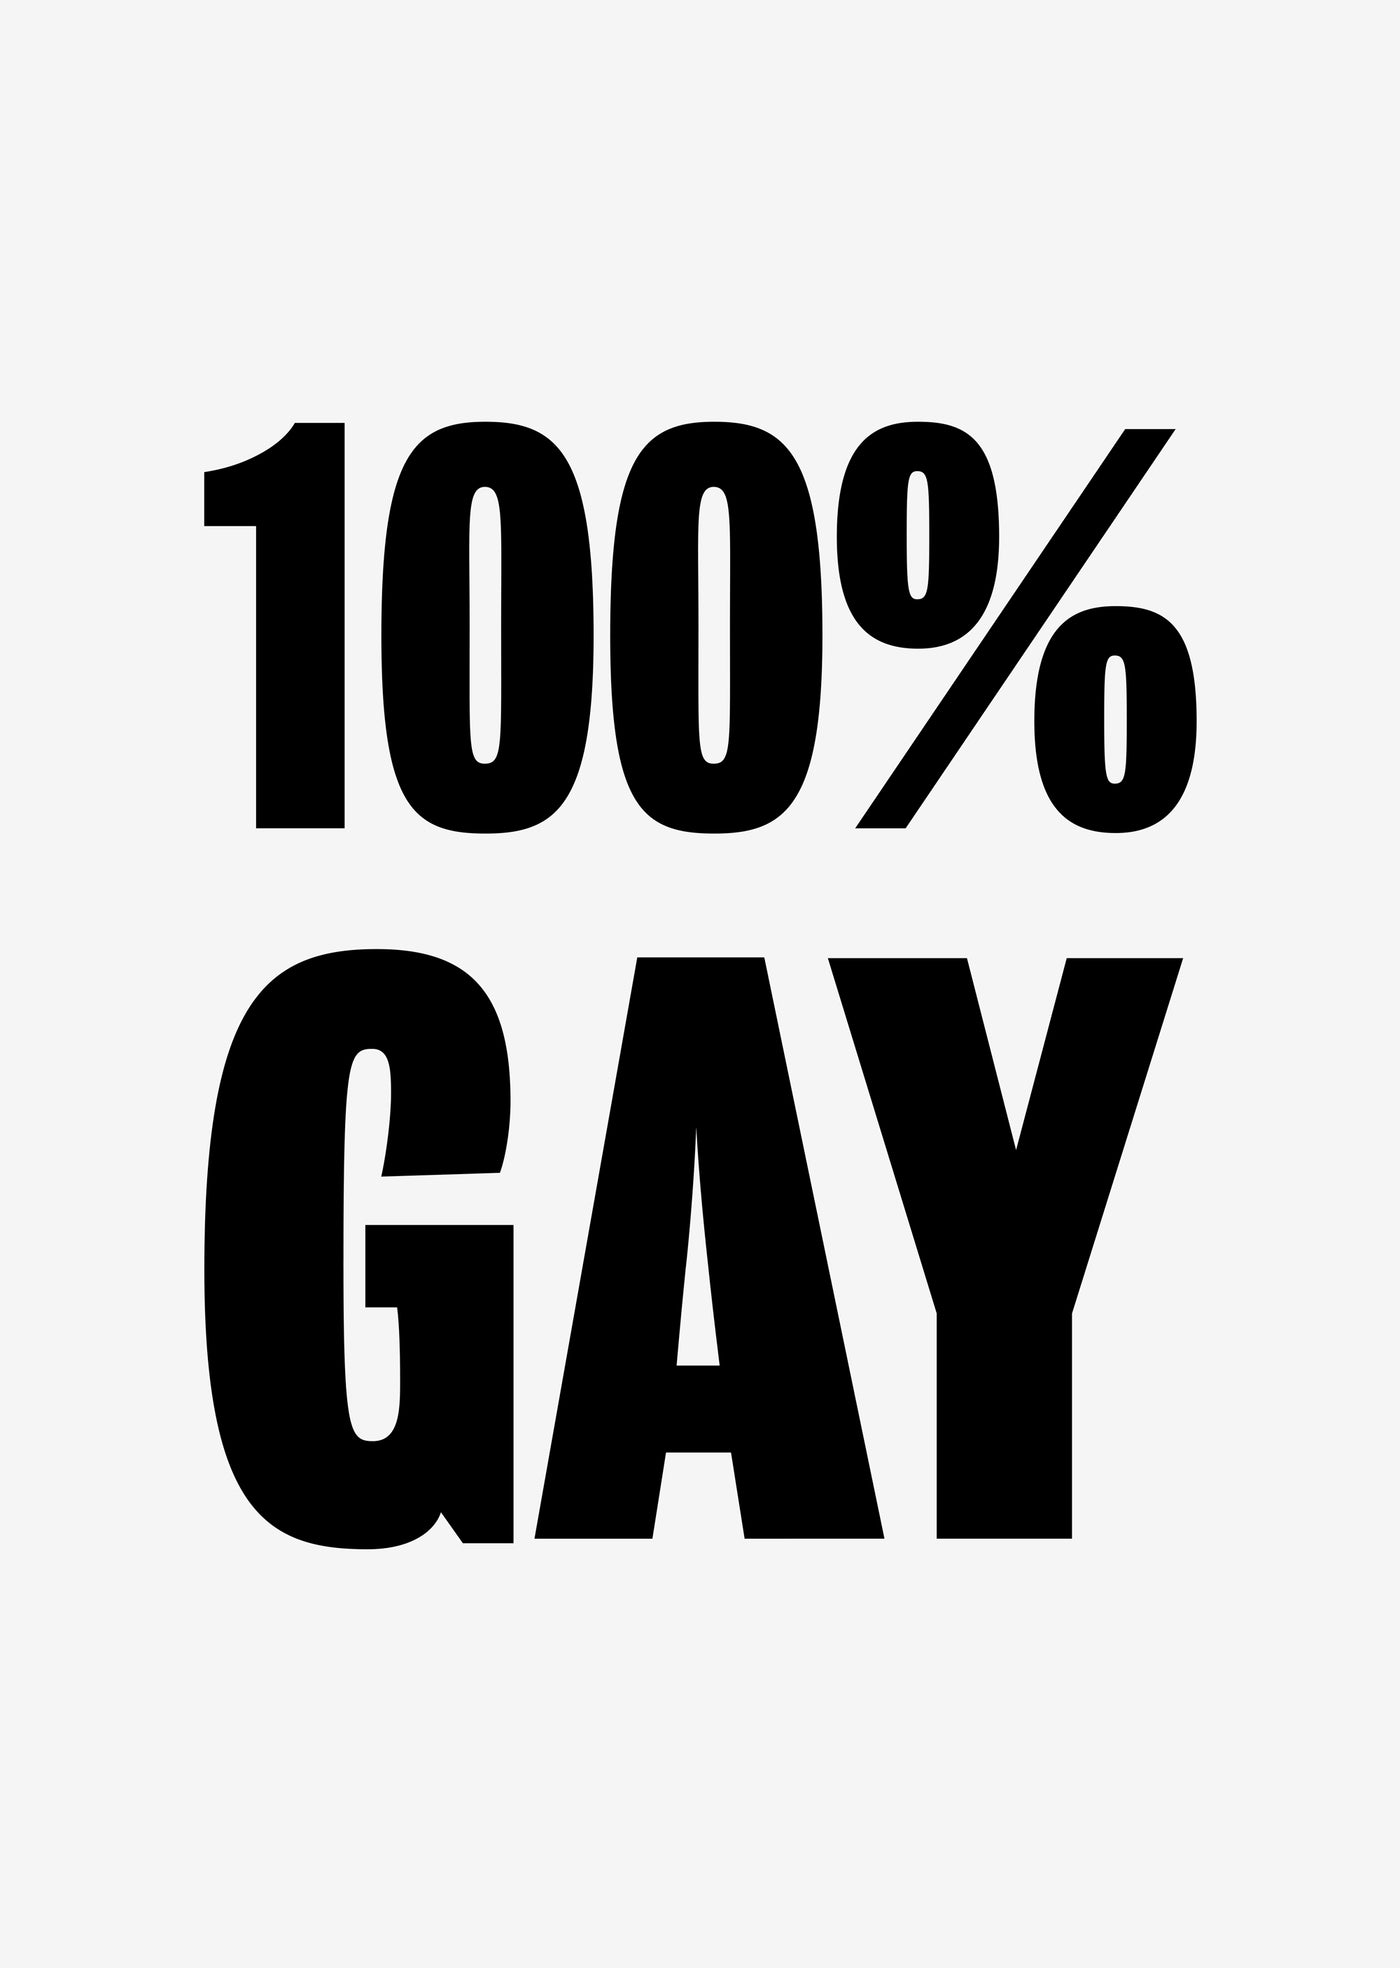 100% Gay' Typographic Wall Art Print